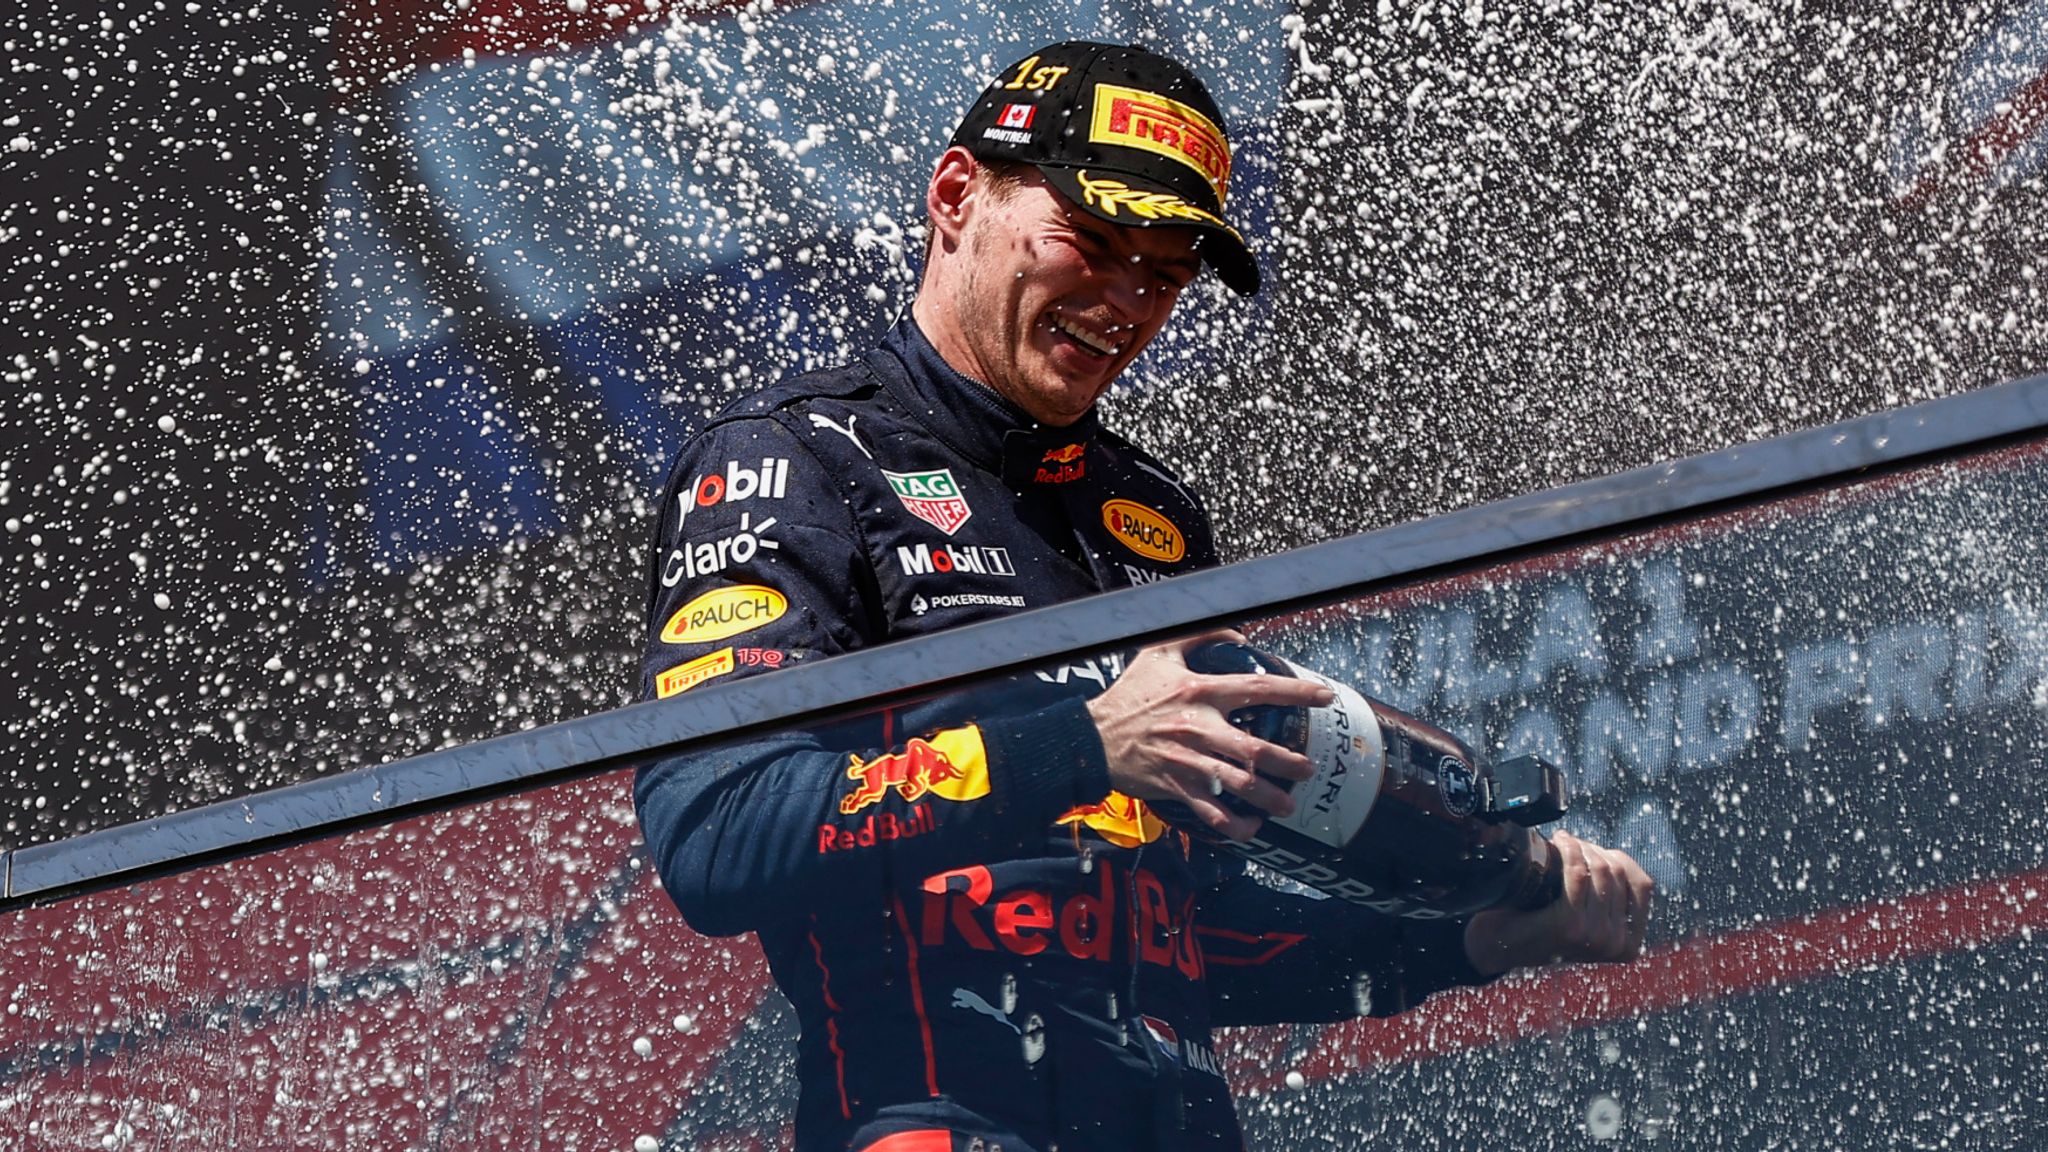 F1: Max Verstappen wins Canadian GP